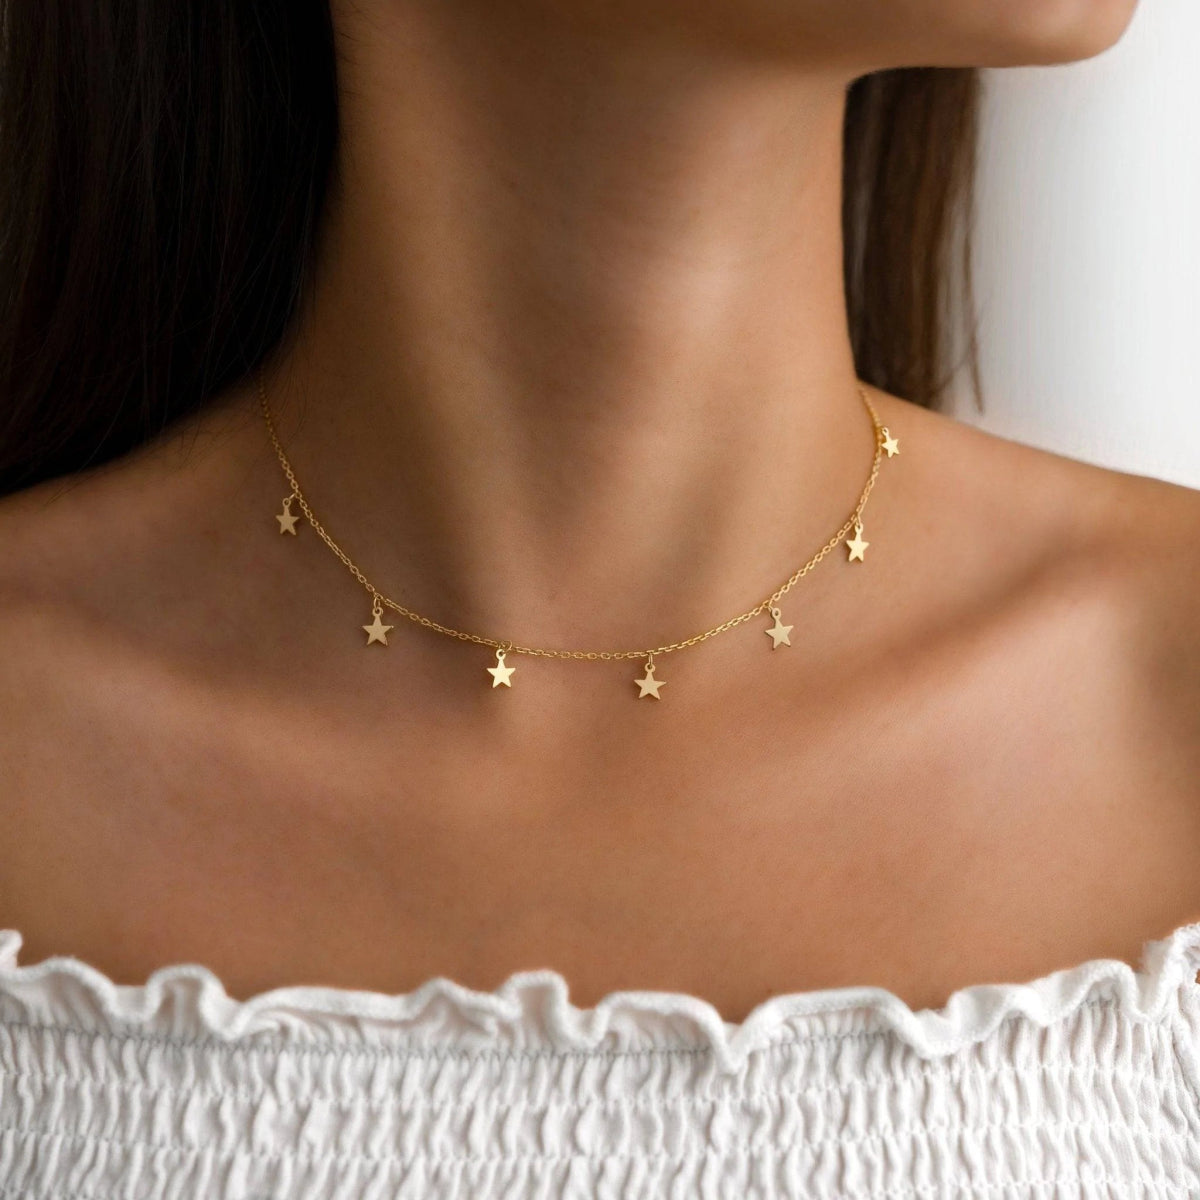 Short necklace choker 18k gold, stars, hypoallergenic, 1 year warranty